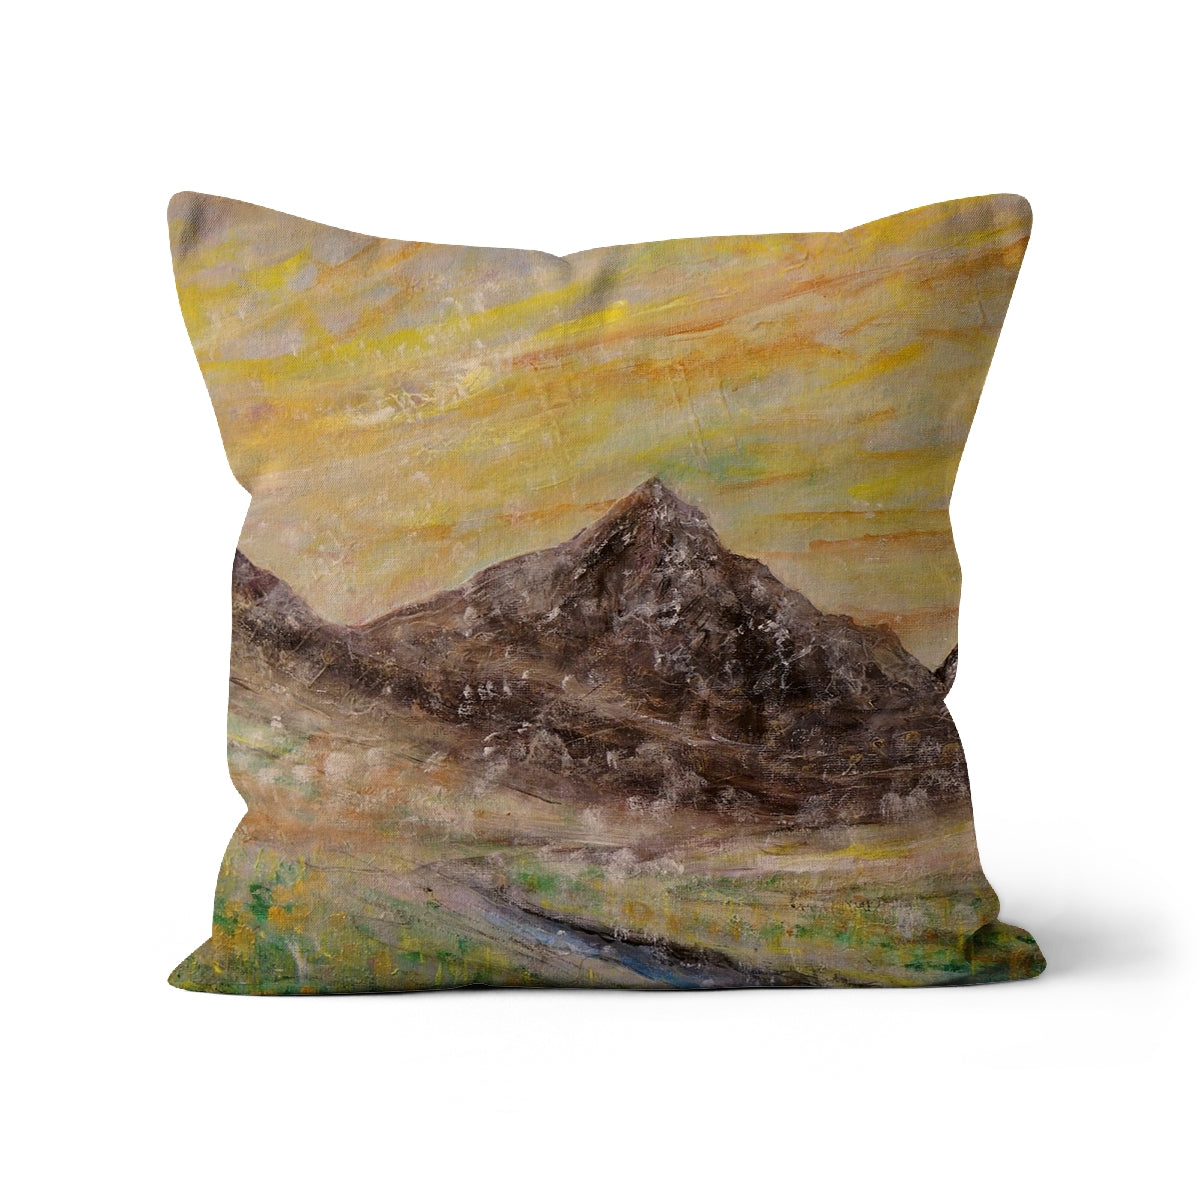 Glen Rosa Mist Arran Art Gifts Cushion-Cushions-Arran Art Gallery-Linen-22"x22"-Paintings, Prints, Homeware, Art Gifts From Scotland By Scottish Artist Kevin Hunter